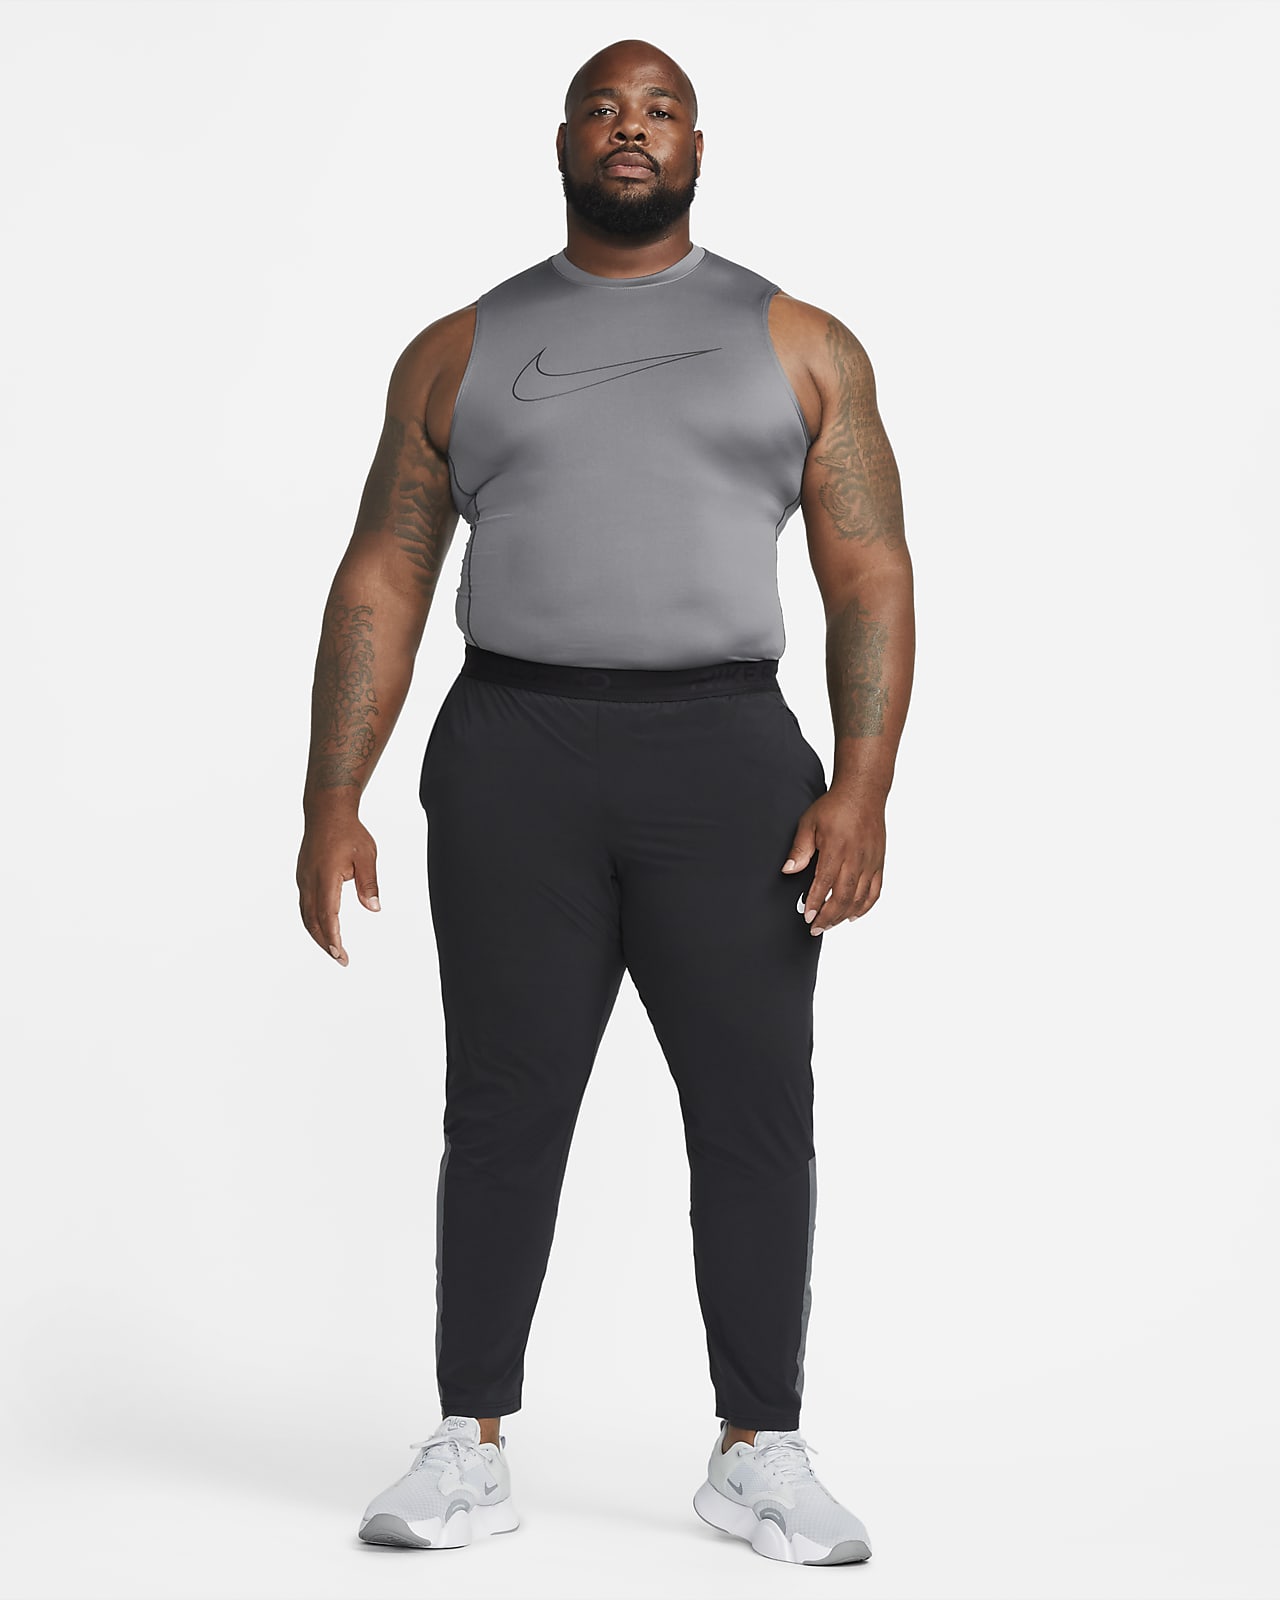 Nike Men's Pro Sleeveless Training Shirt Tank Top BV5600-010 Black